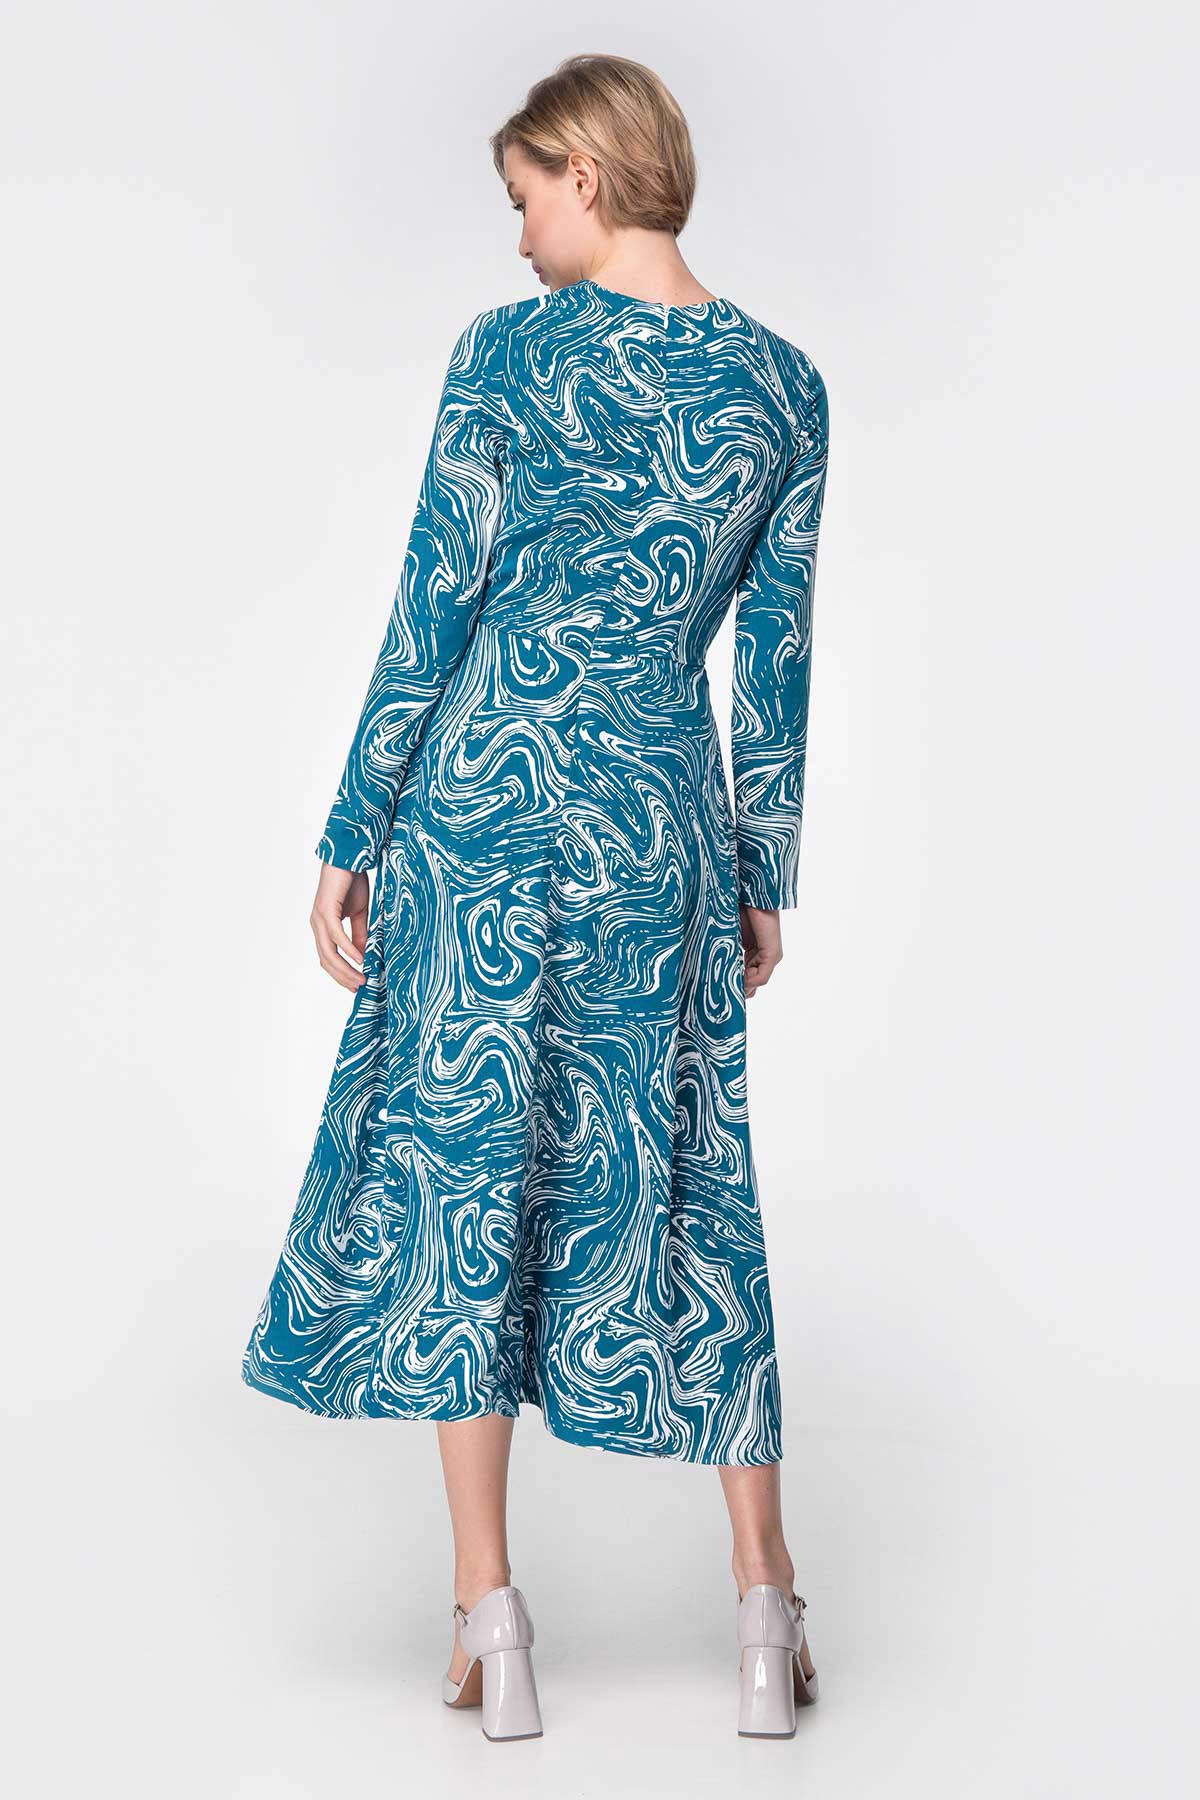 Midi dress with turquoise print, photo 5